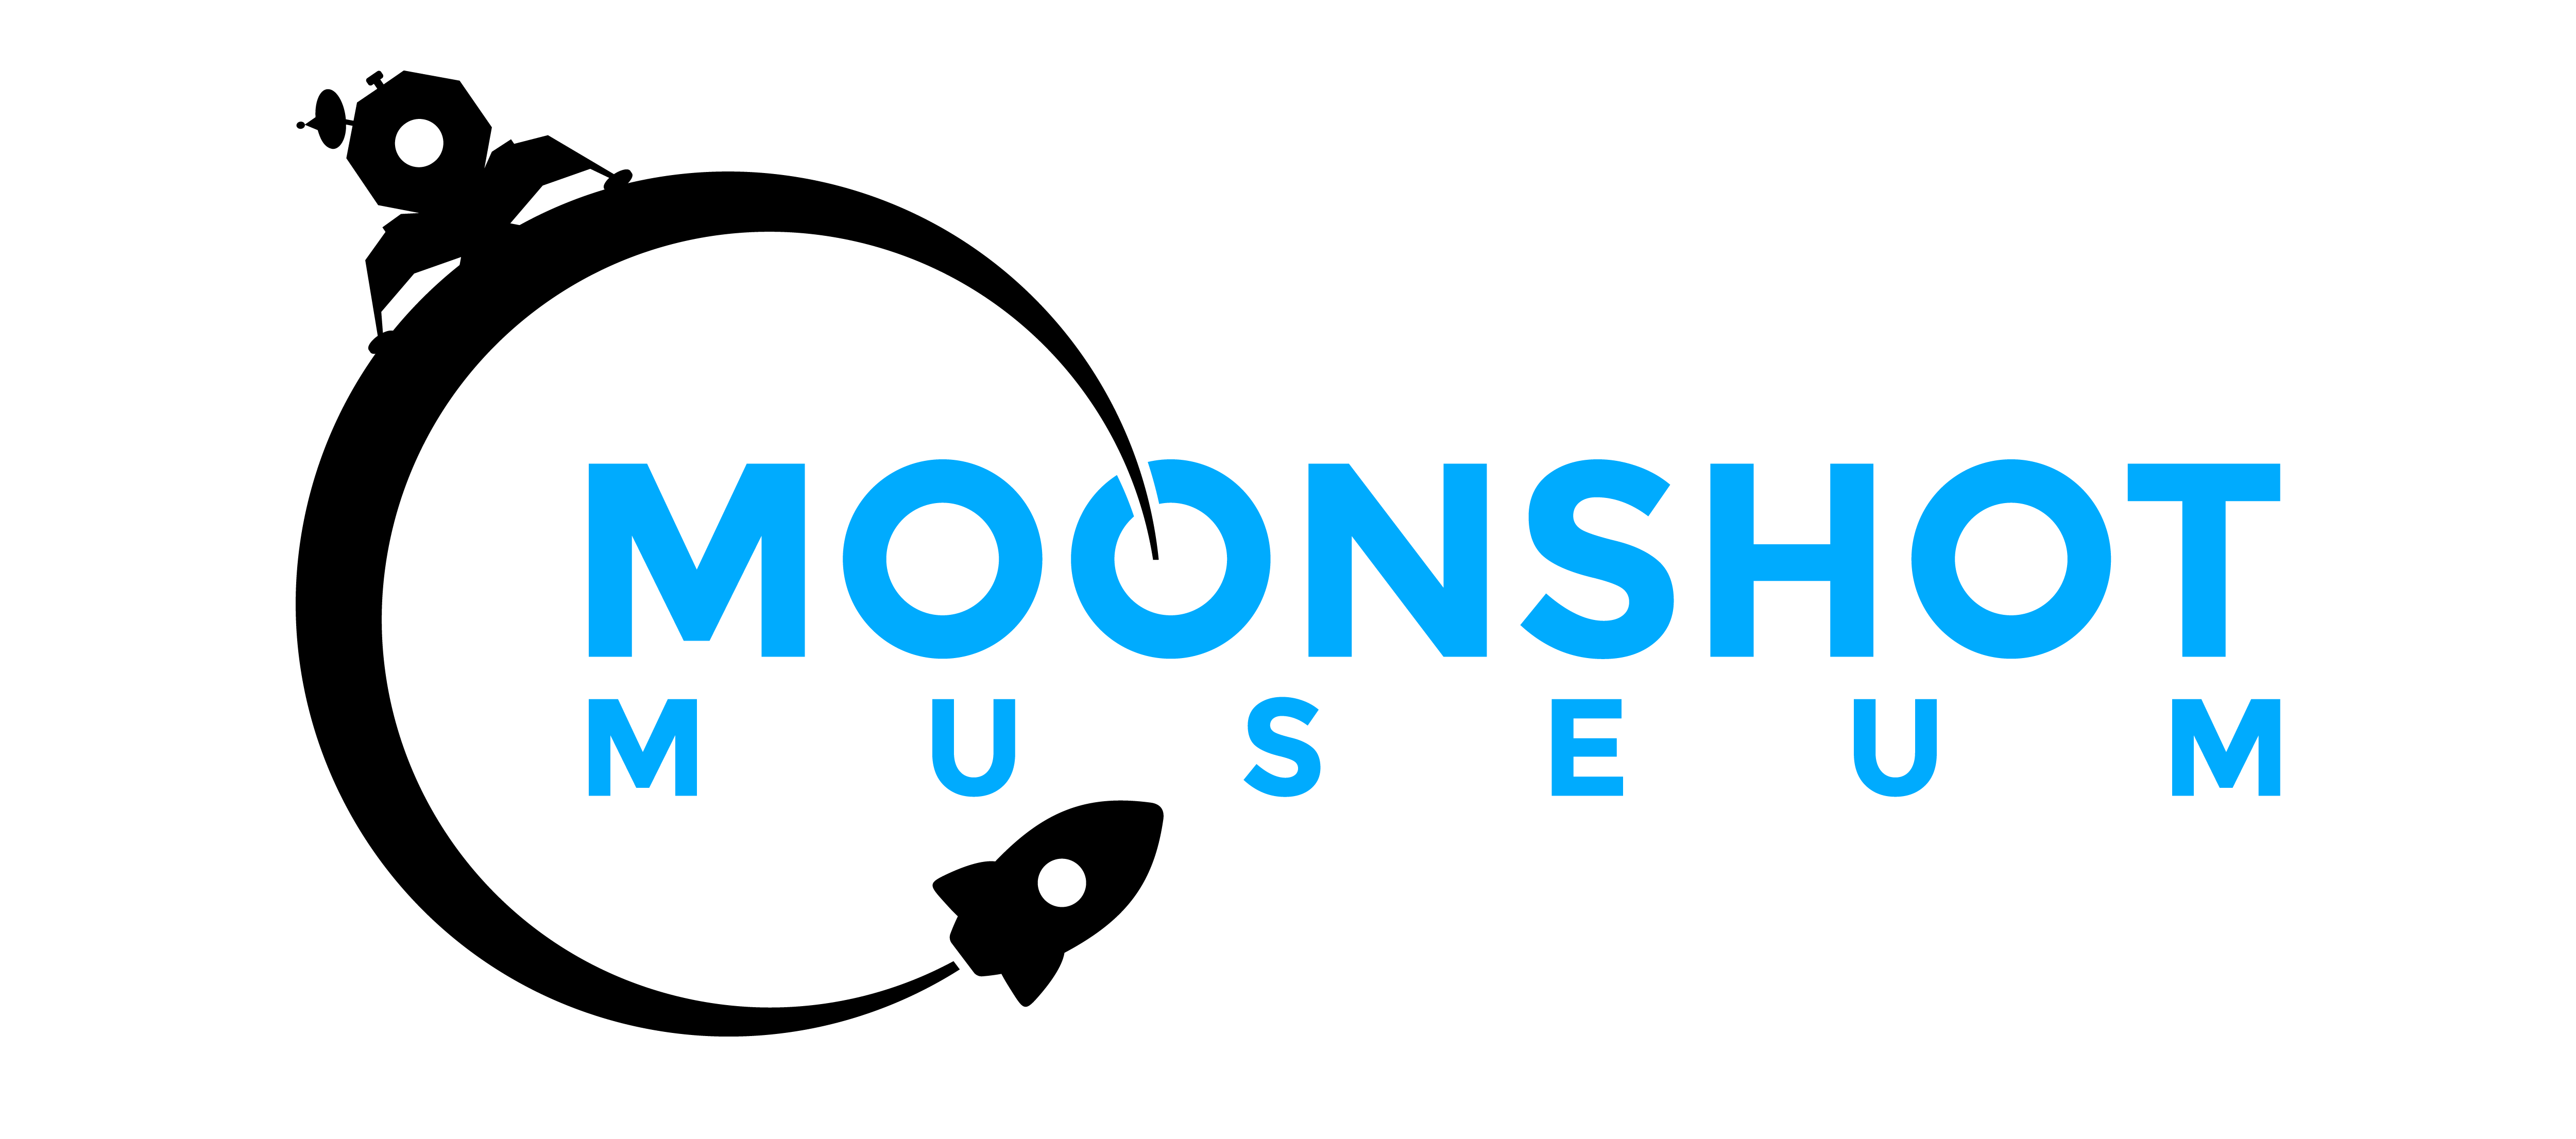 Moonshot Museum logo